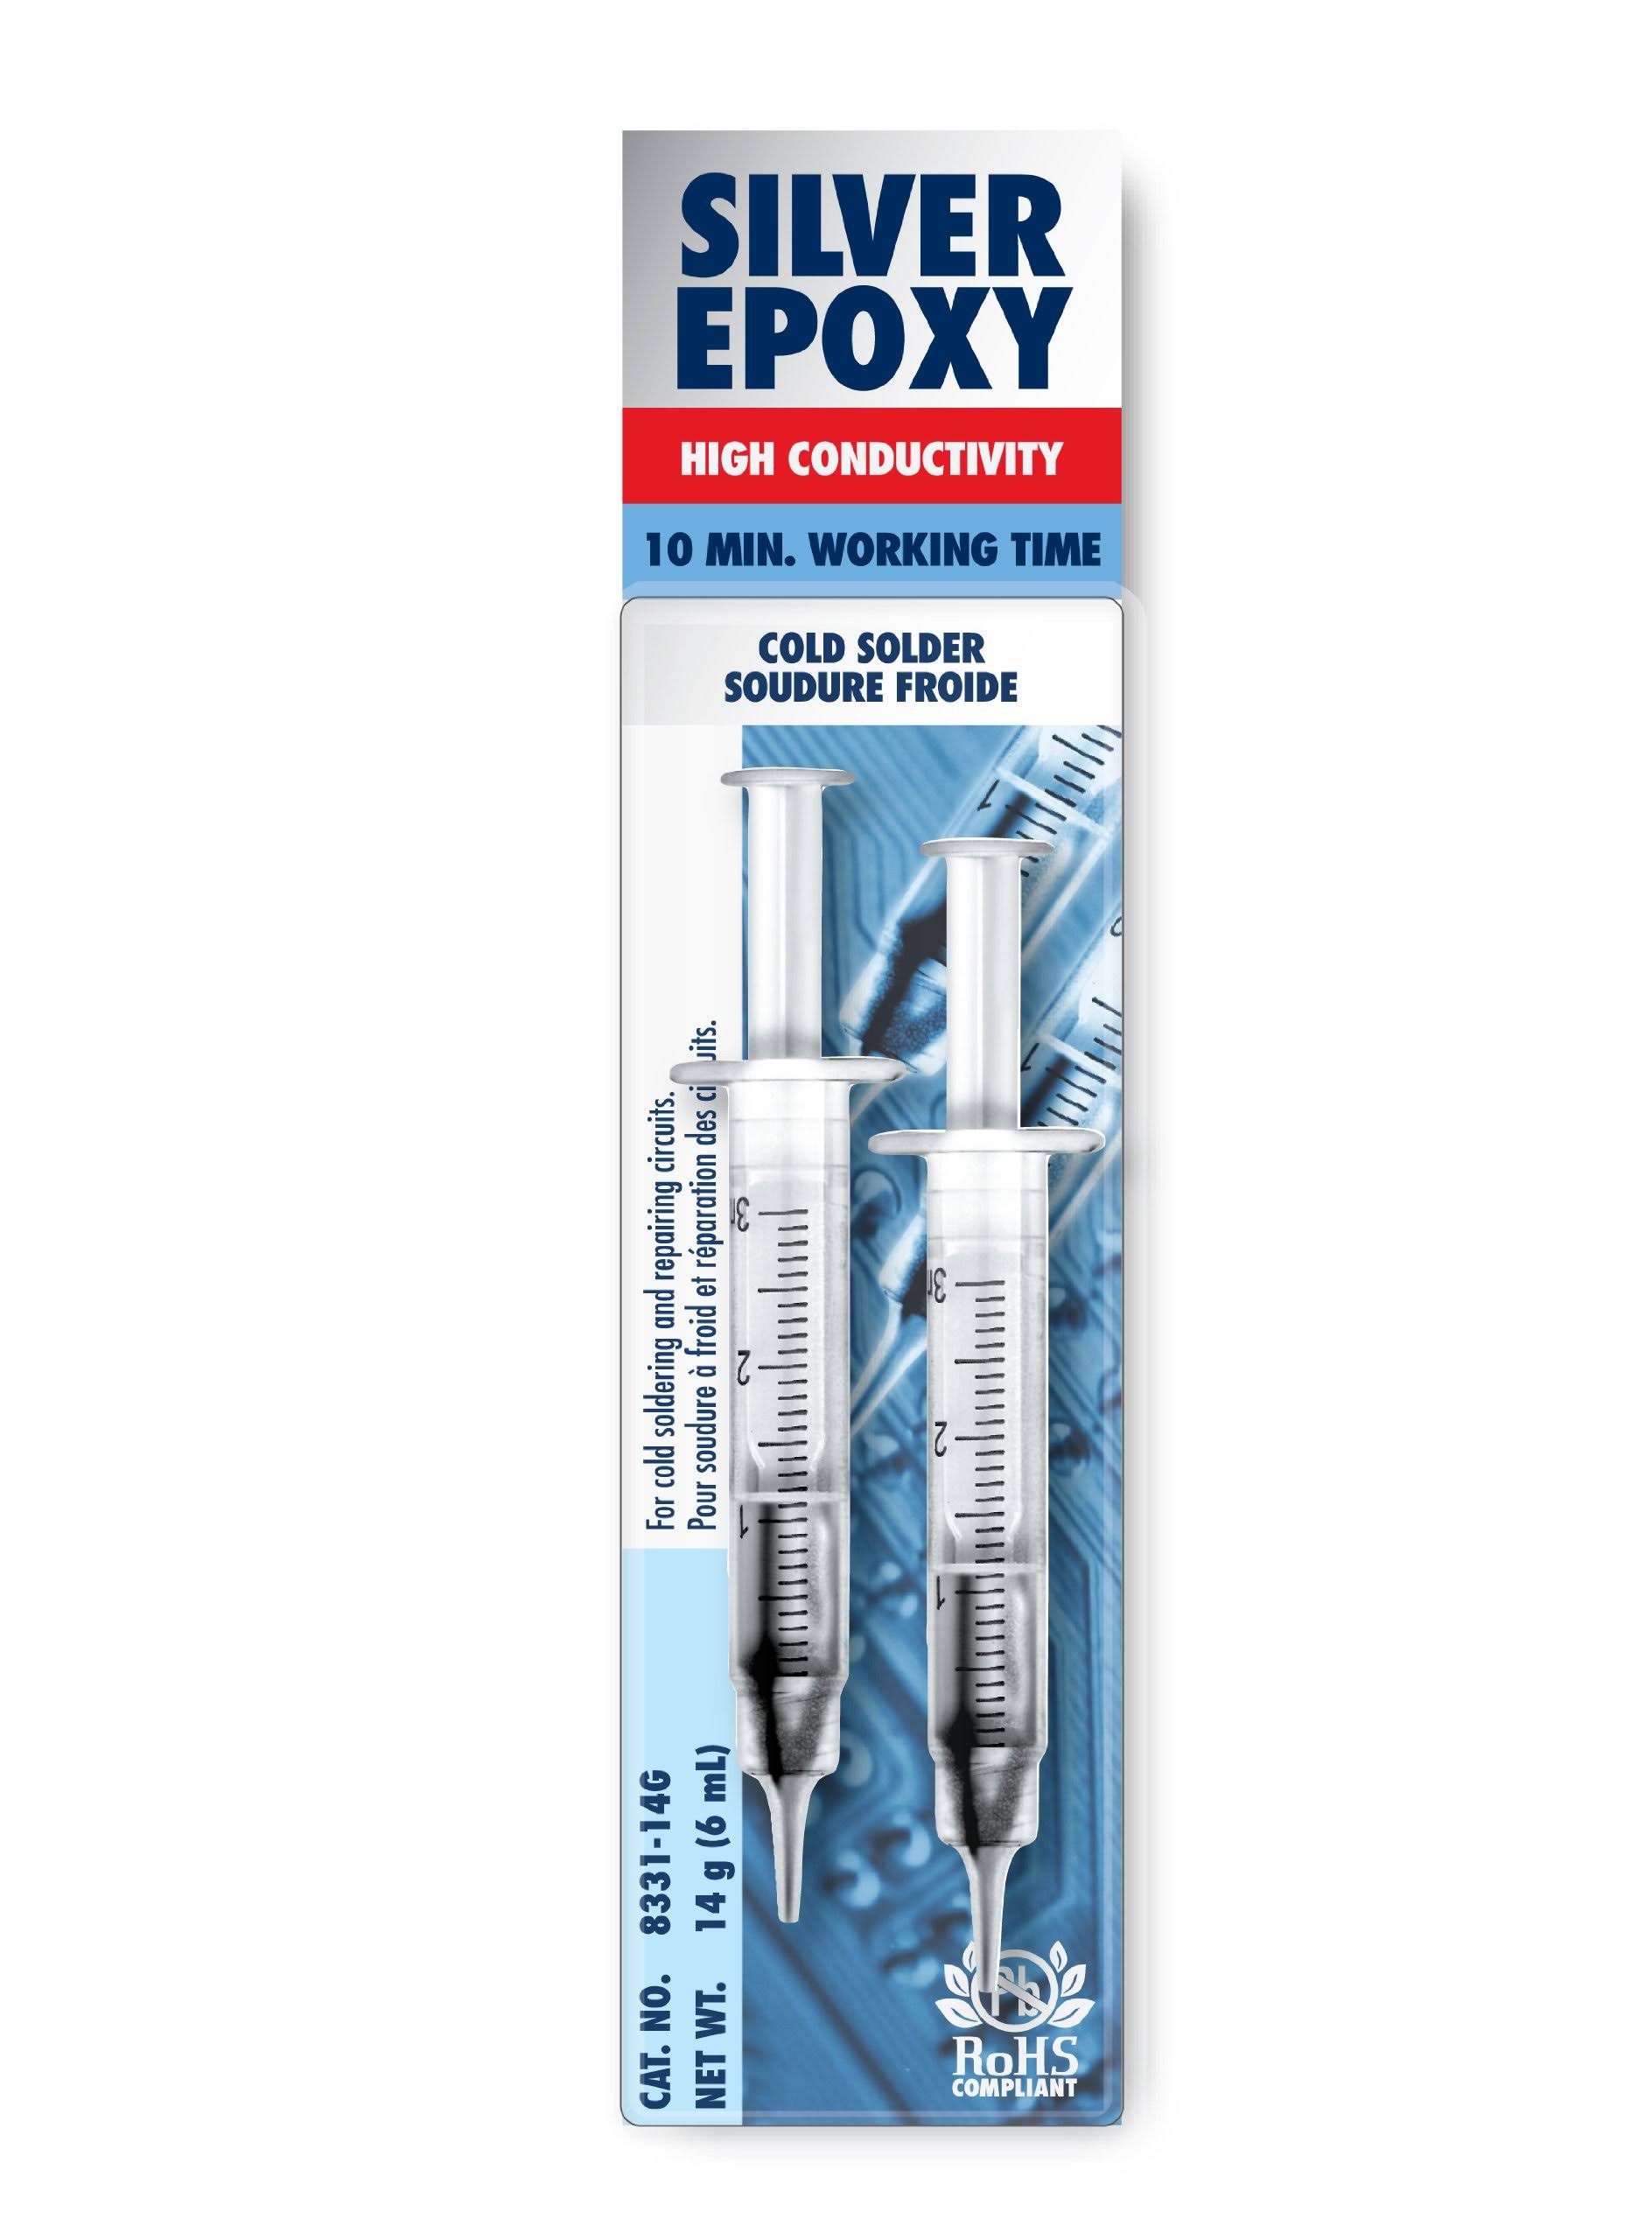 MG Chemicals 8331 Conductive Epoxy Adhesive Syringe Kit - 0.35oz